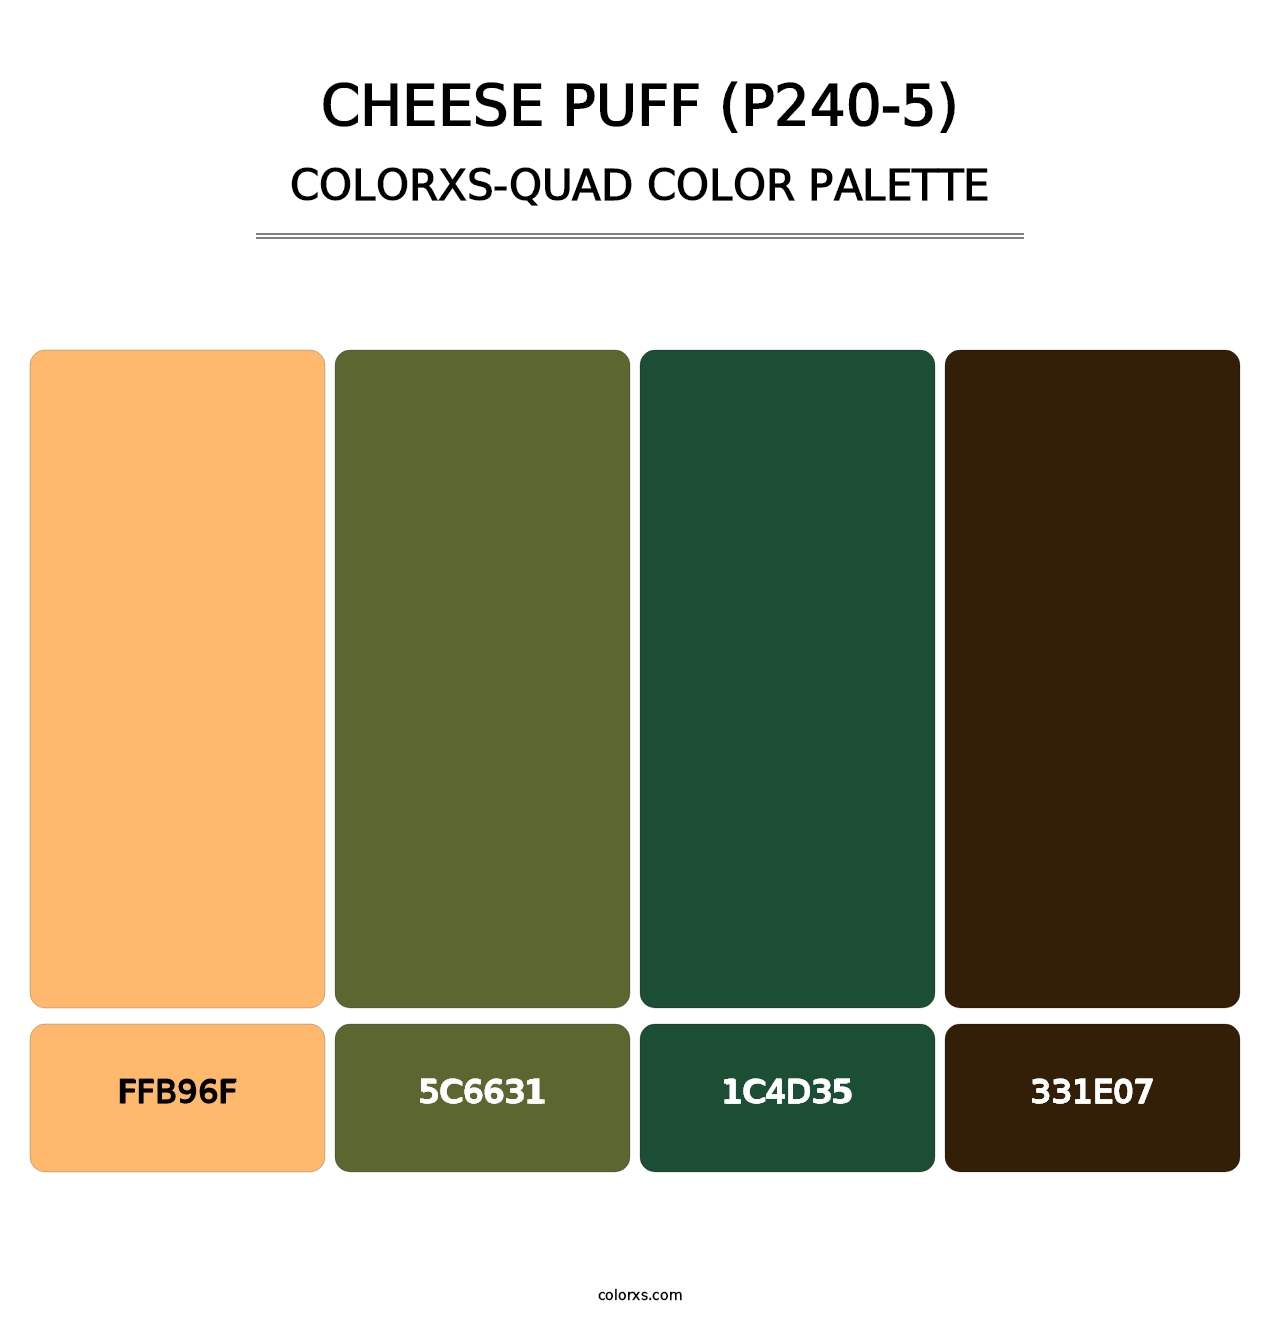 Cheese Puff (P240-5) - Colorxs Quad Palette